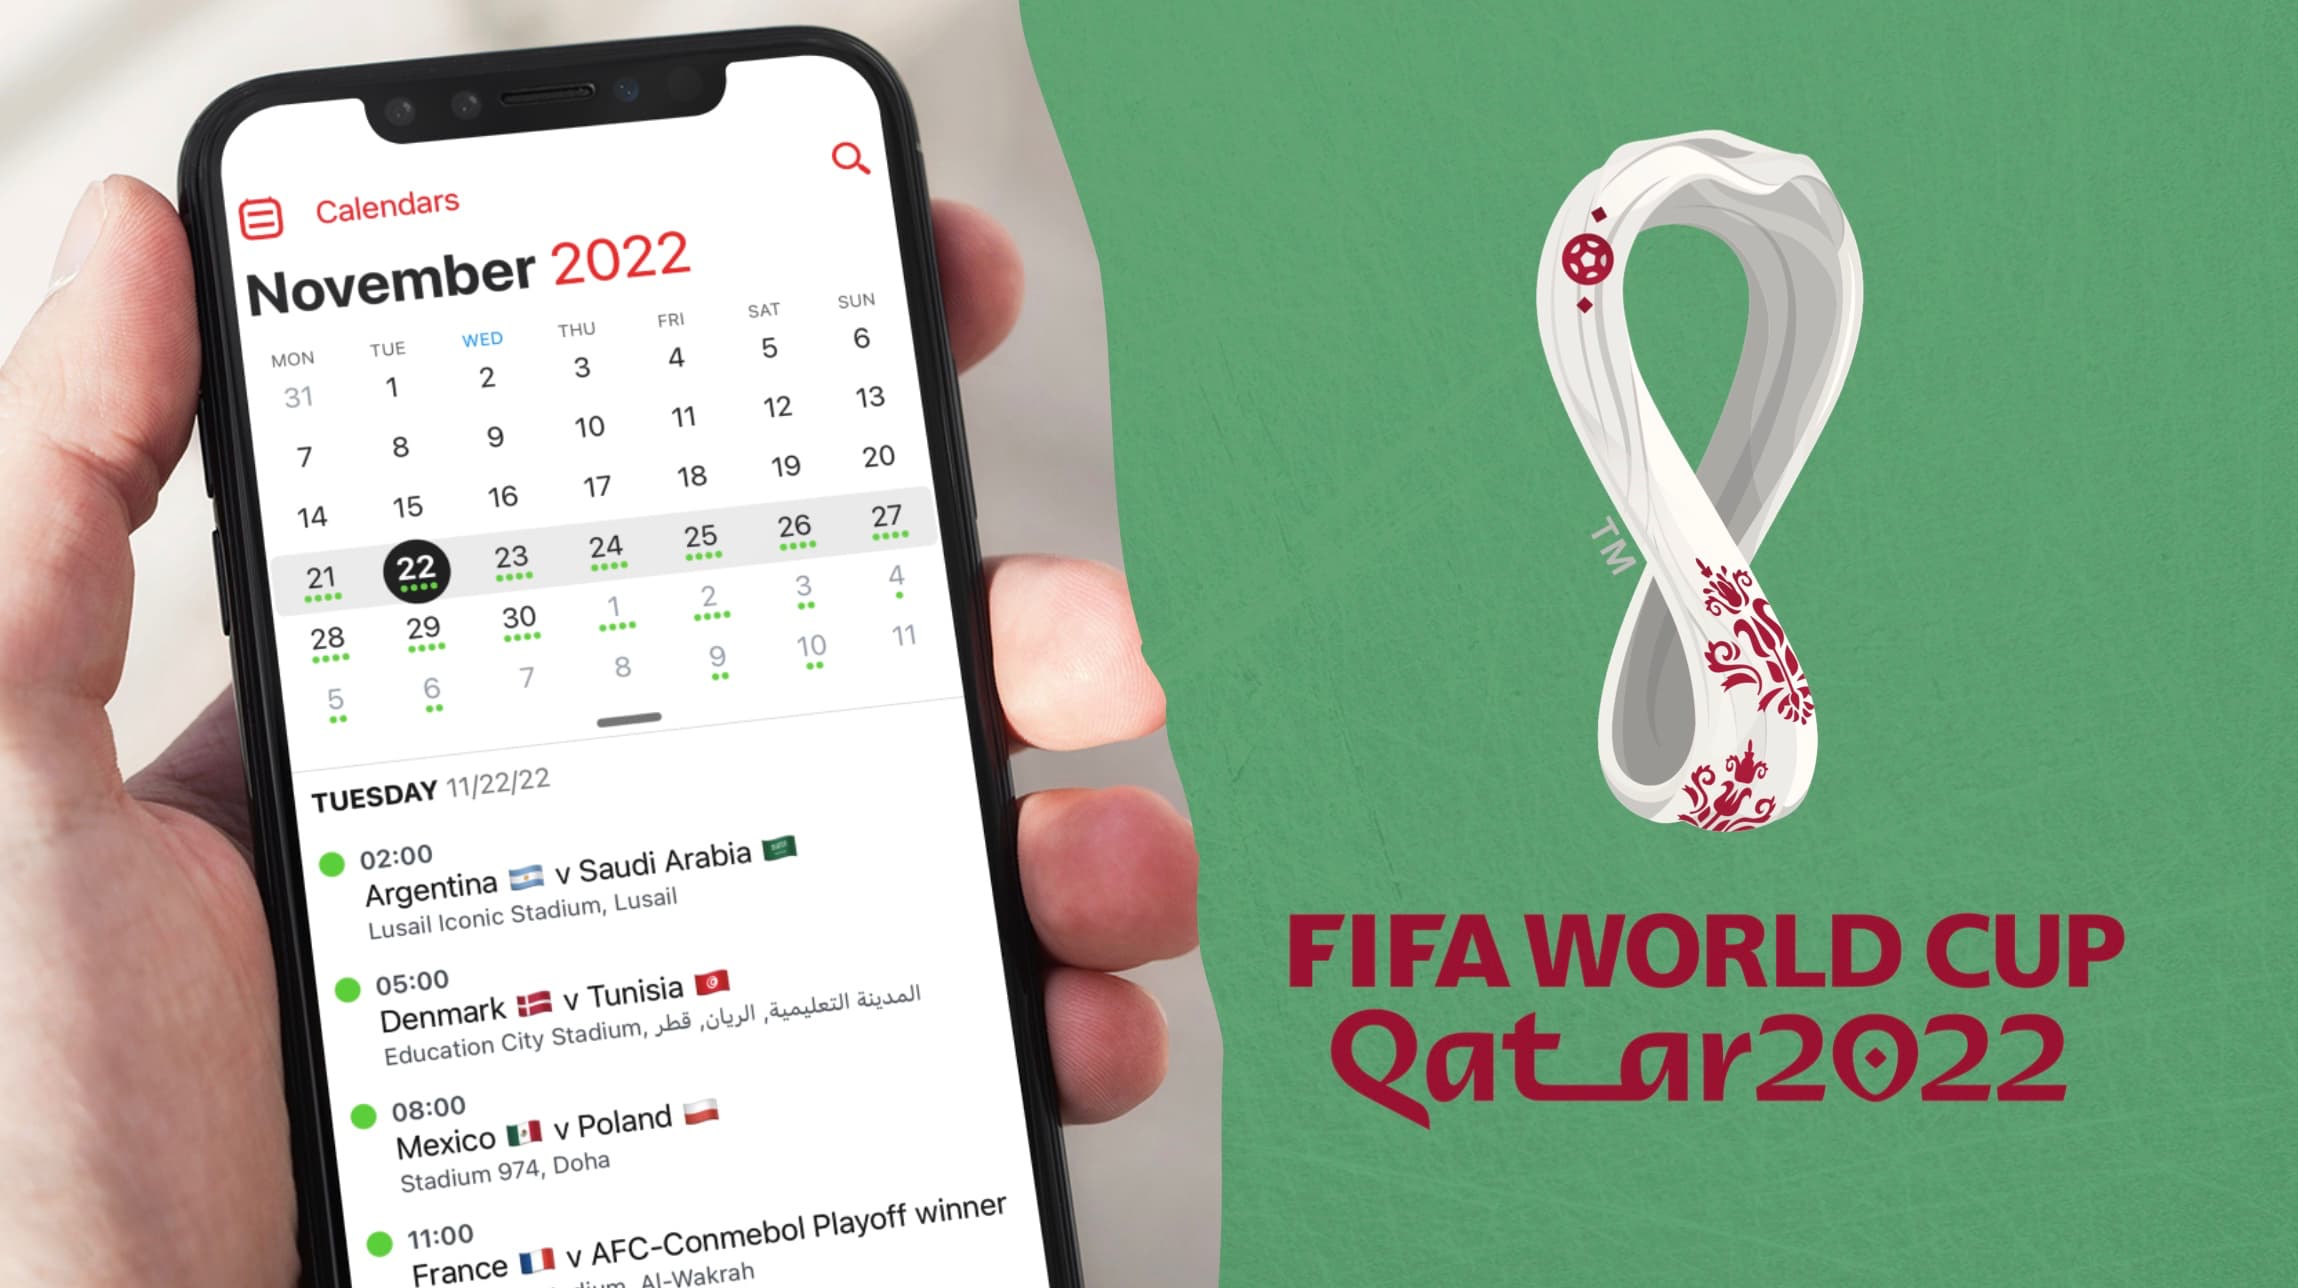 World Cup schedule on Calendar